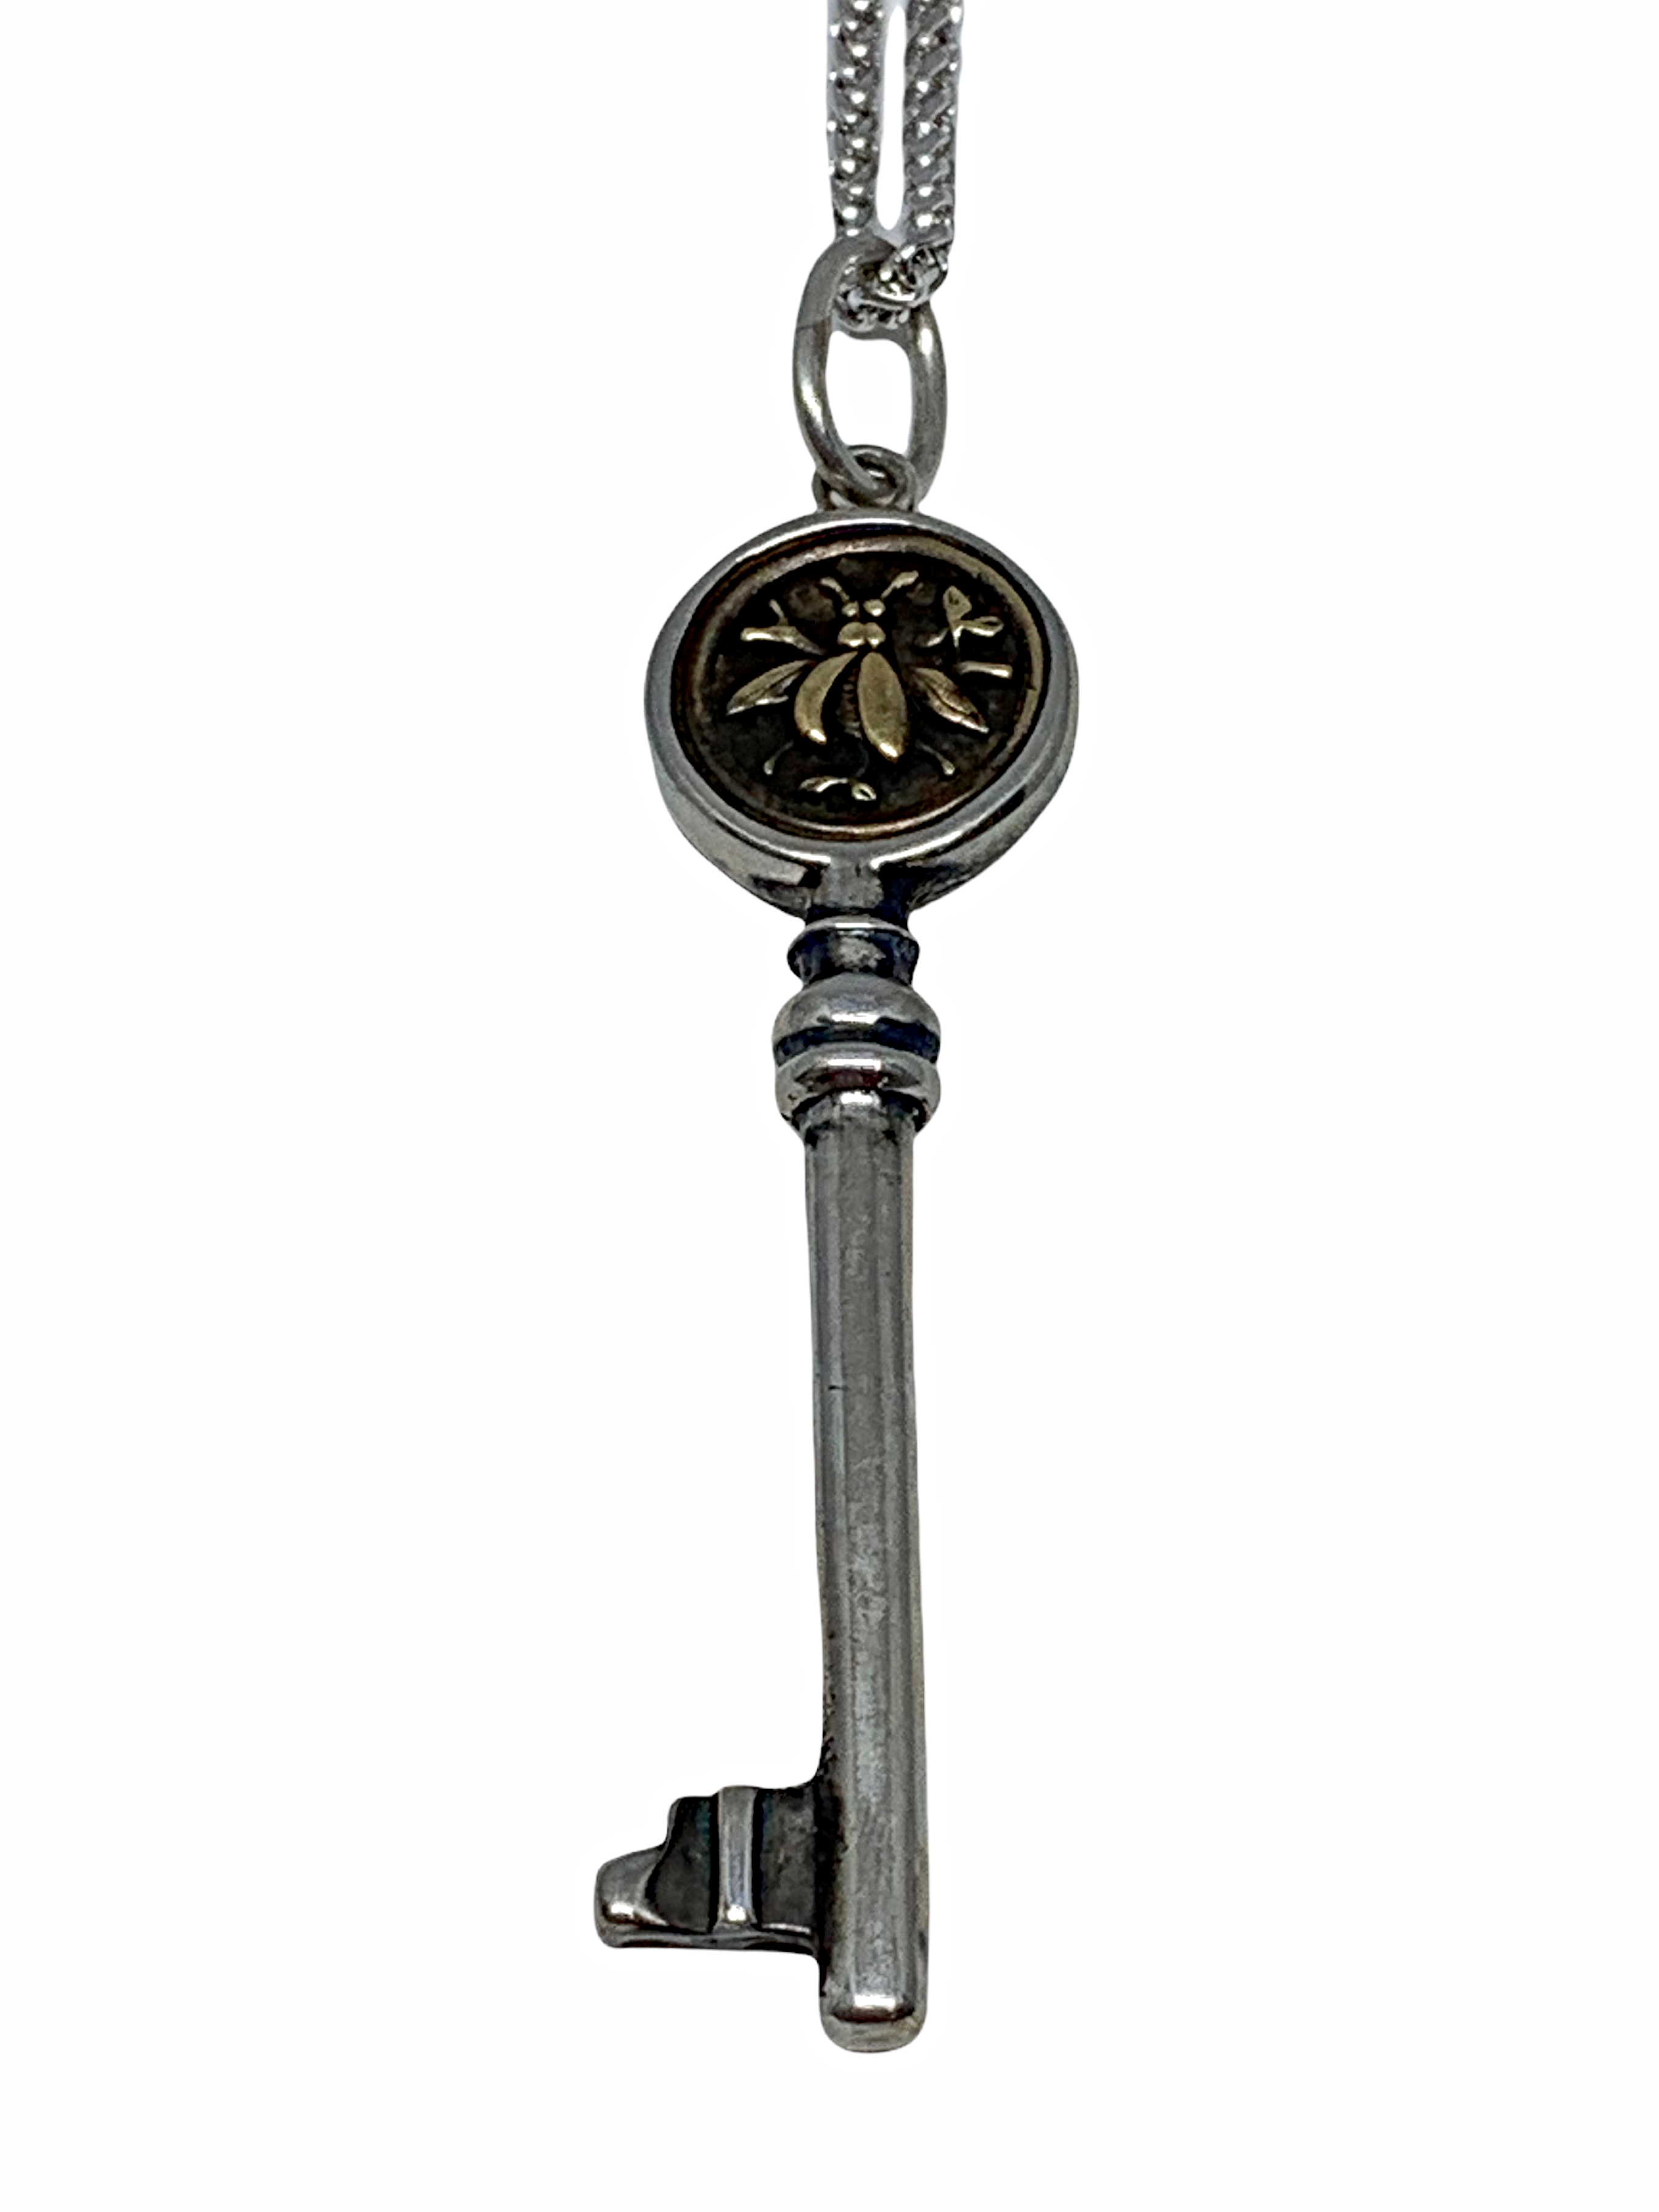 Handmade sterling silver bee key pendant  by Karyn Chopik | Effusion Art Gallery + Cast Glass Studio, Invermere BC